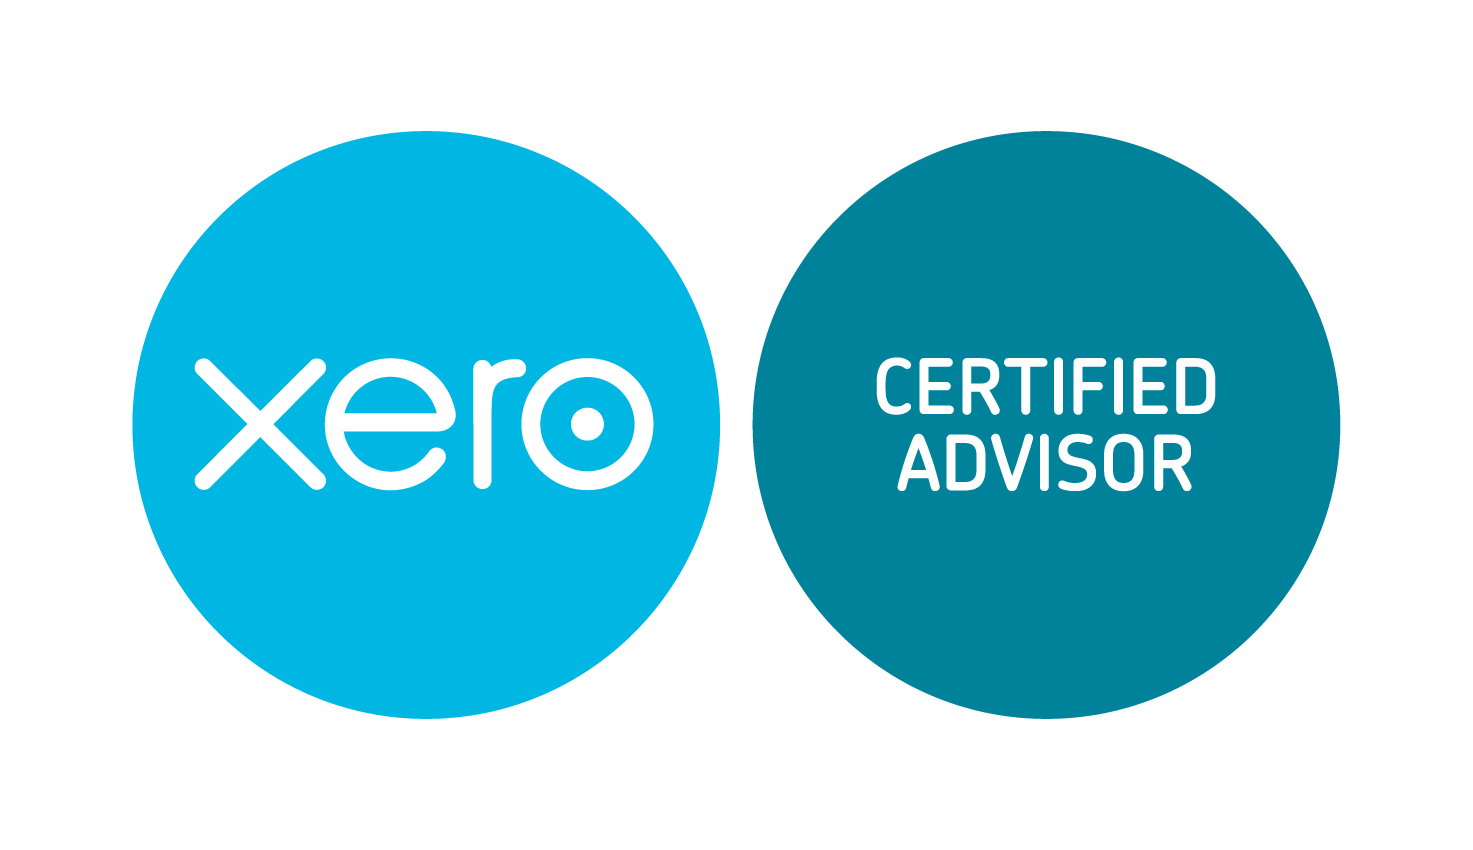 Certified Xero advisor logo